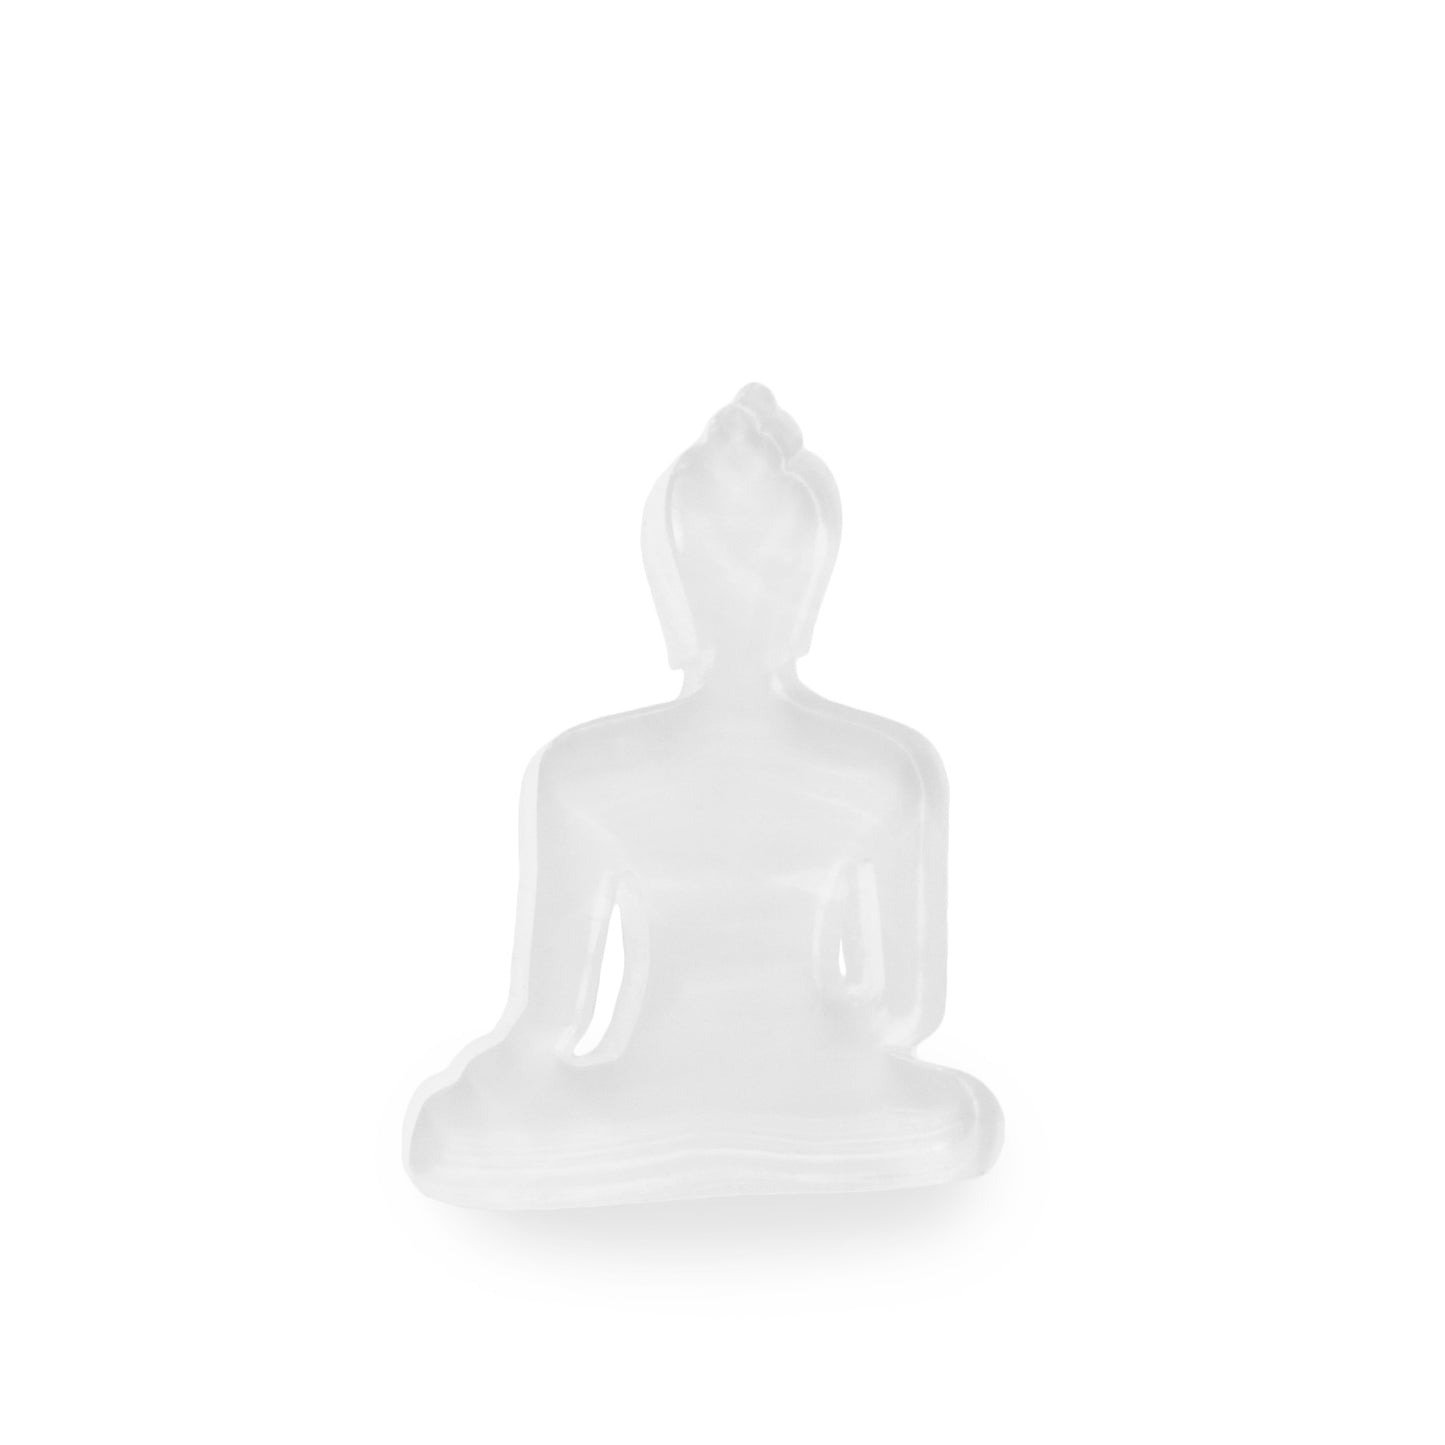 Buddha statue set of 3 - Concrete, Black and White